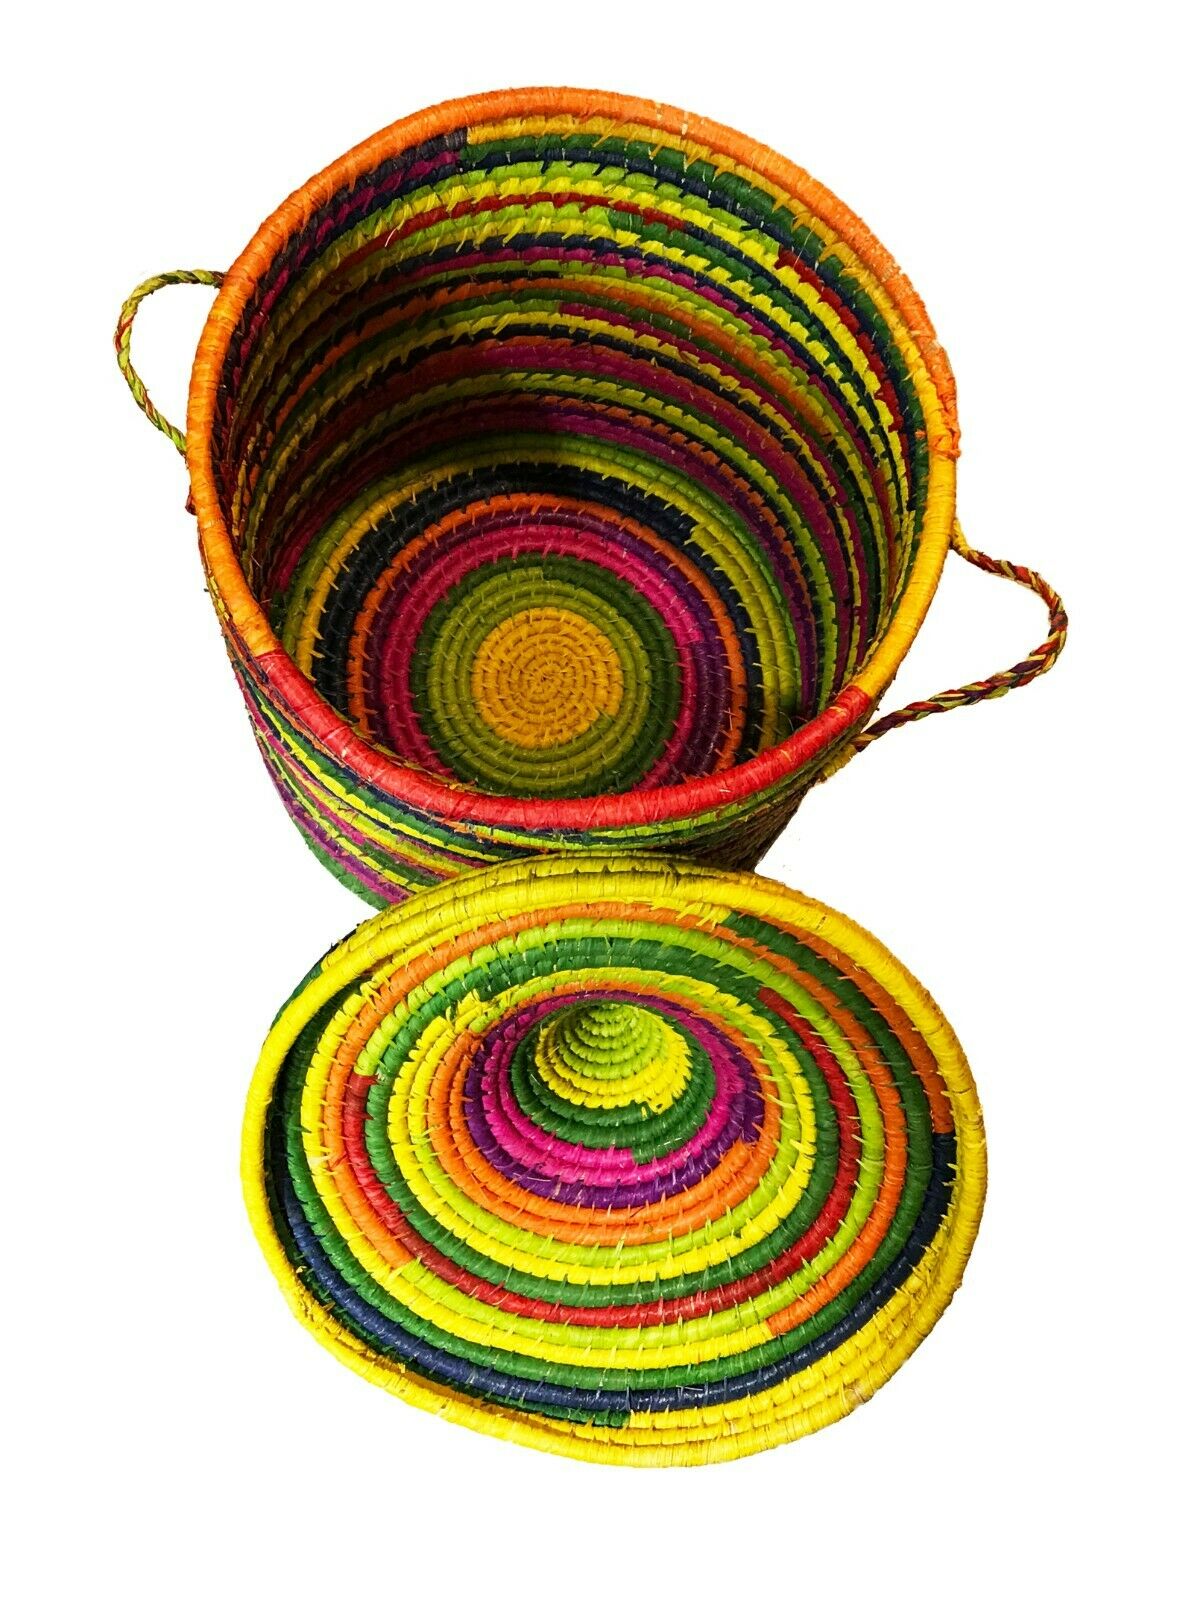 #399 Colorful Basket W/ Lid Senegal West Africa 21"h by 15" D